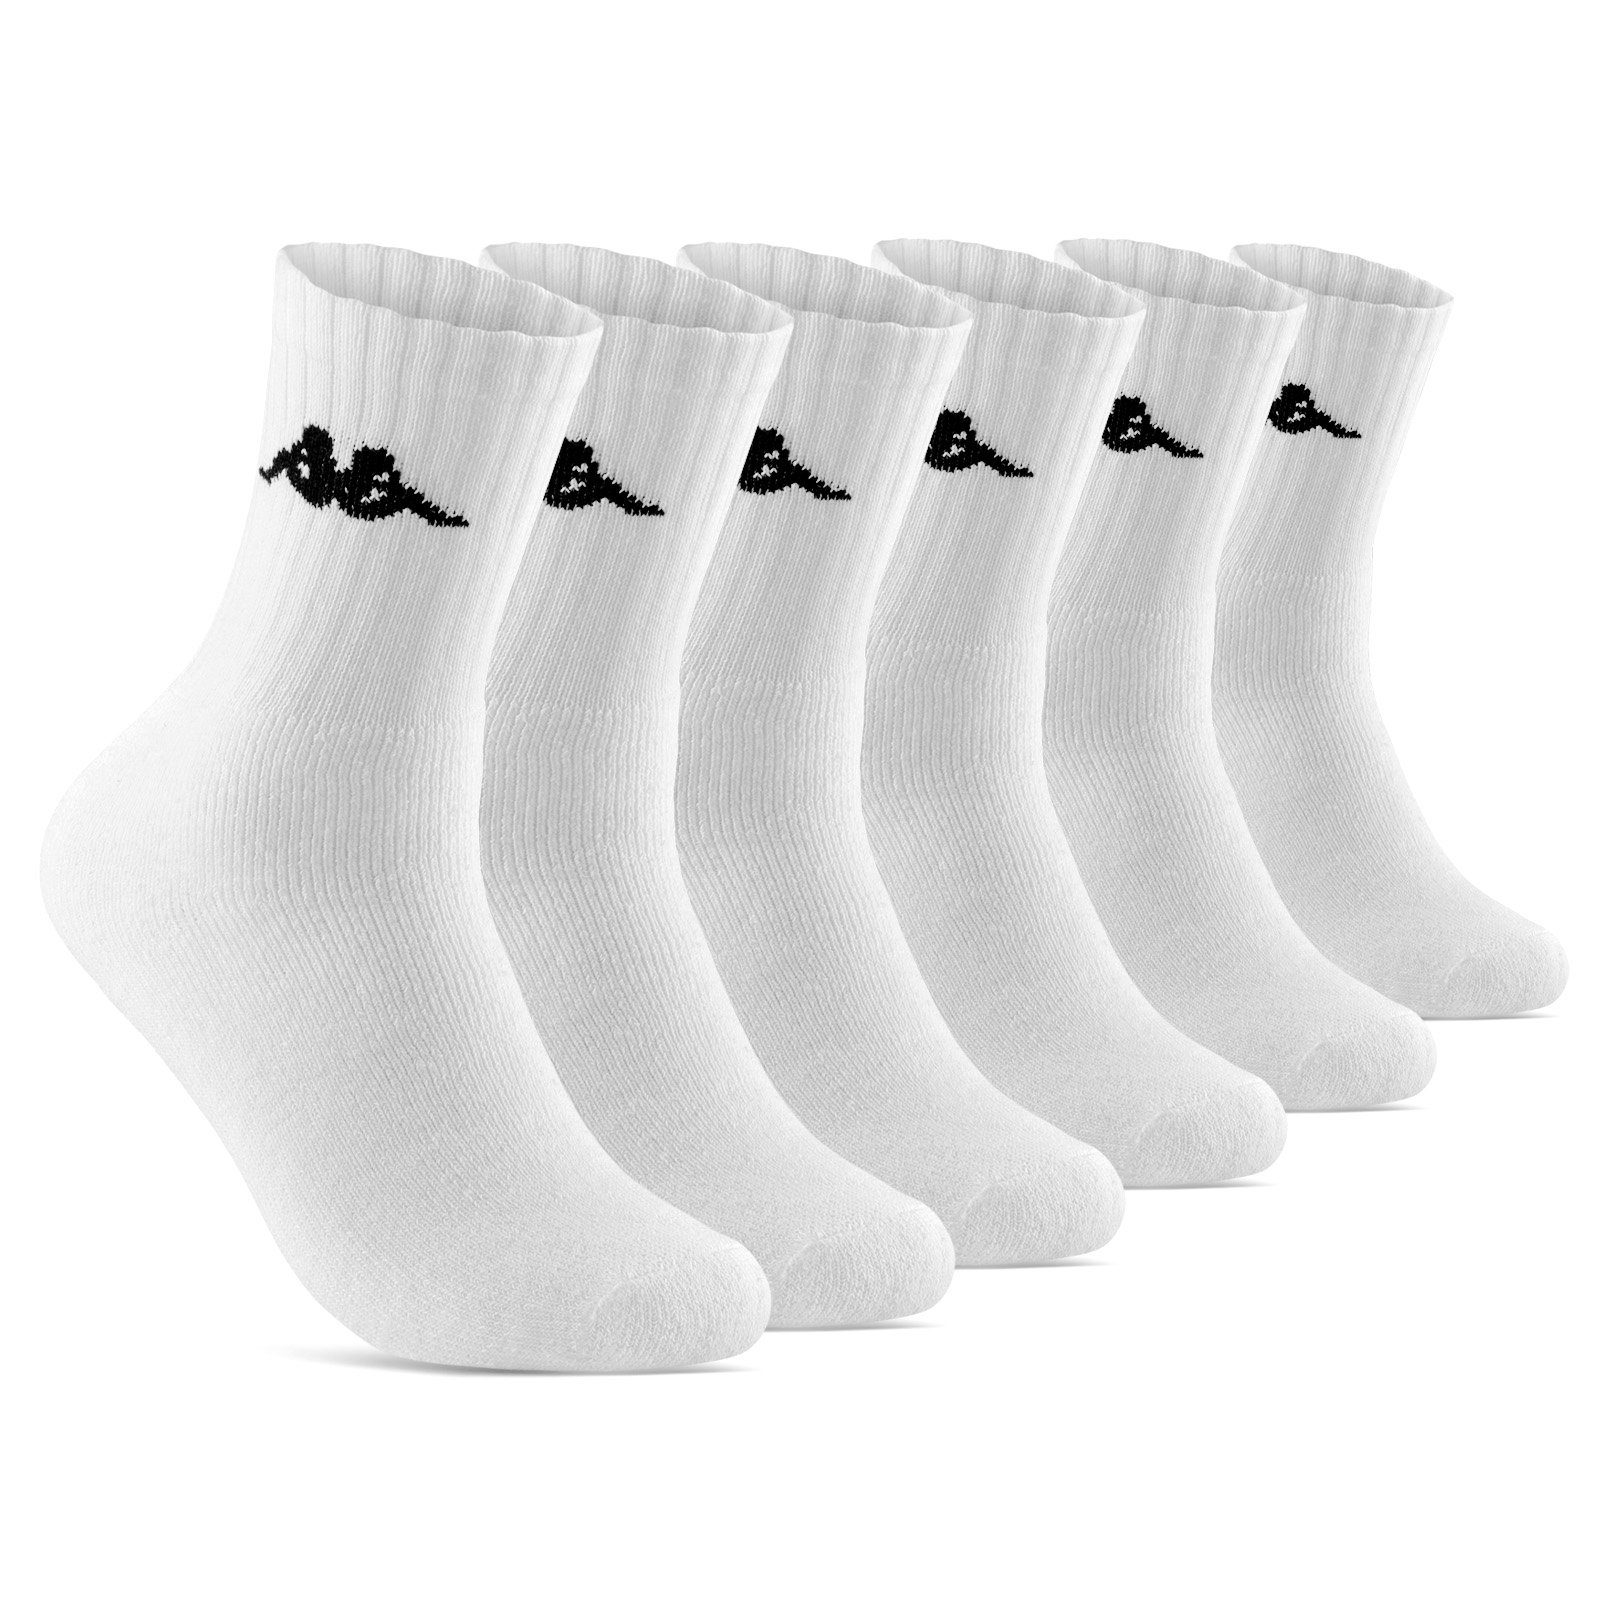 sockenkauf24 Sportsocken 6 oder 12 Paar KAPPA Socken Herren & Damen Sportsocken (Weiß, 6-Paar, 35-38) Arbeitssocken Baumwolle WP